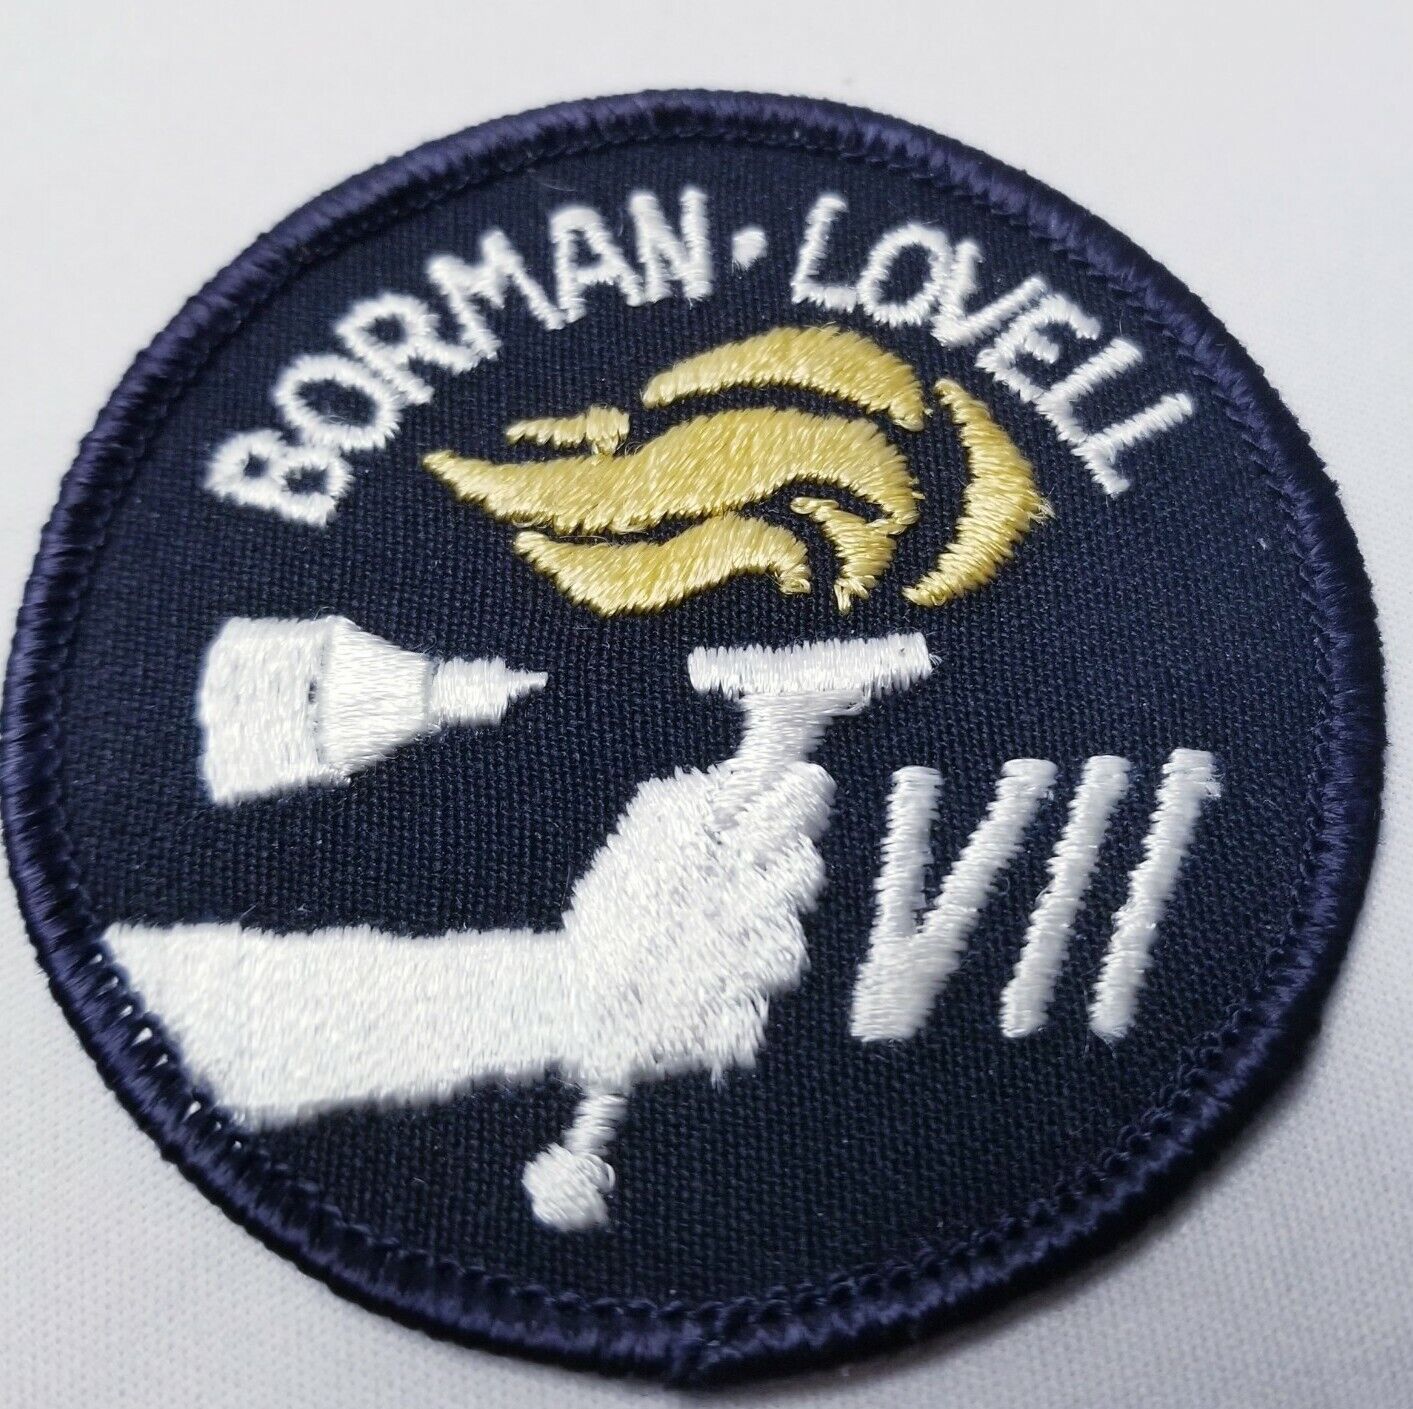 Gemini 7 VII NASA Space Mission 3” Patch Borman Lovell